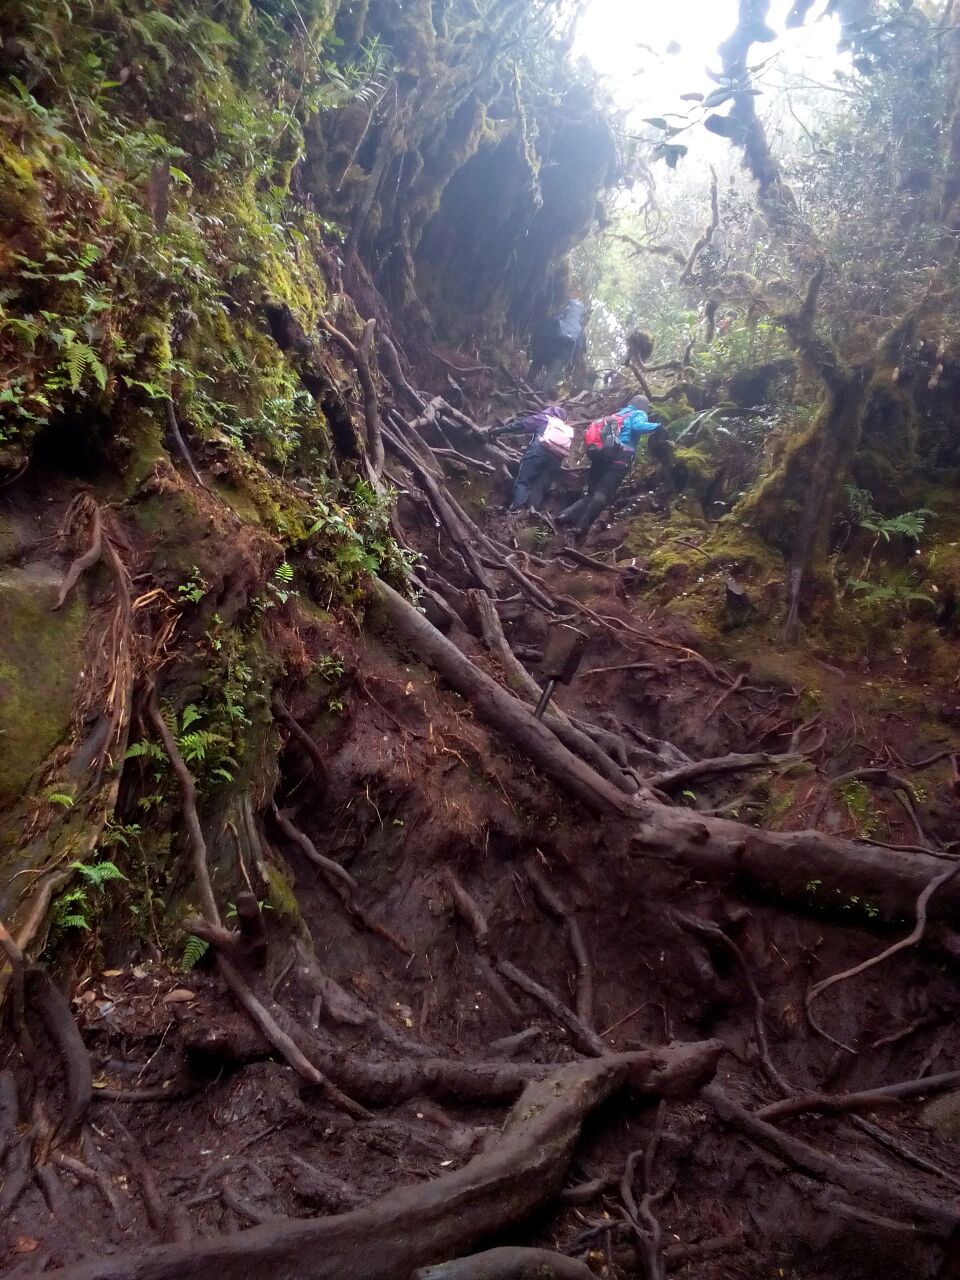 Pengalaman Mendaki Gunung Irau Cameron Highlands Pahang Ohvacay Com